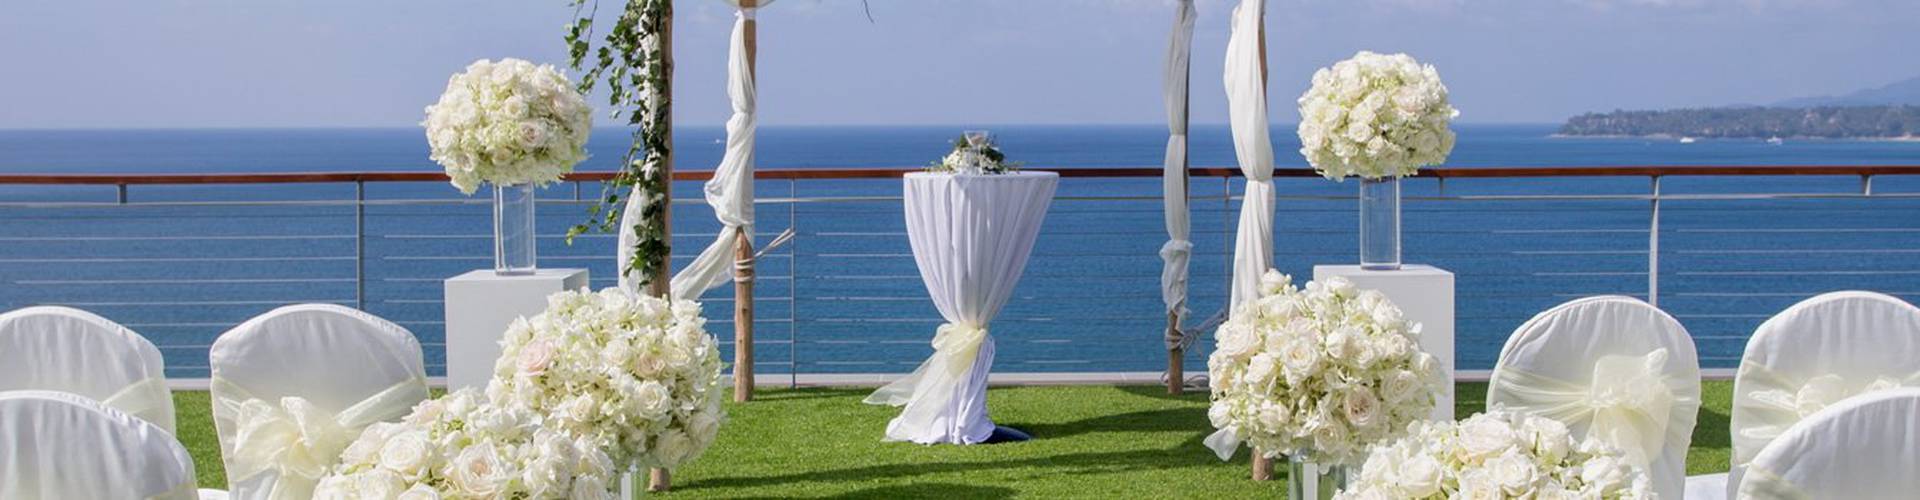 Cape Sienna Phuket Gourmet Hotel & Villas - Phuket - Weddings